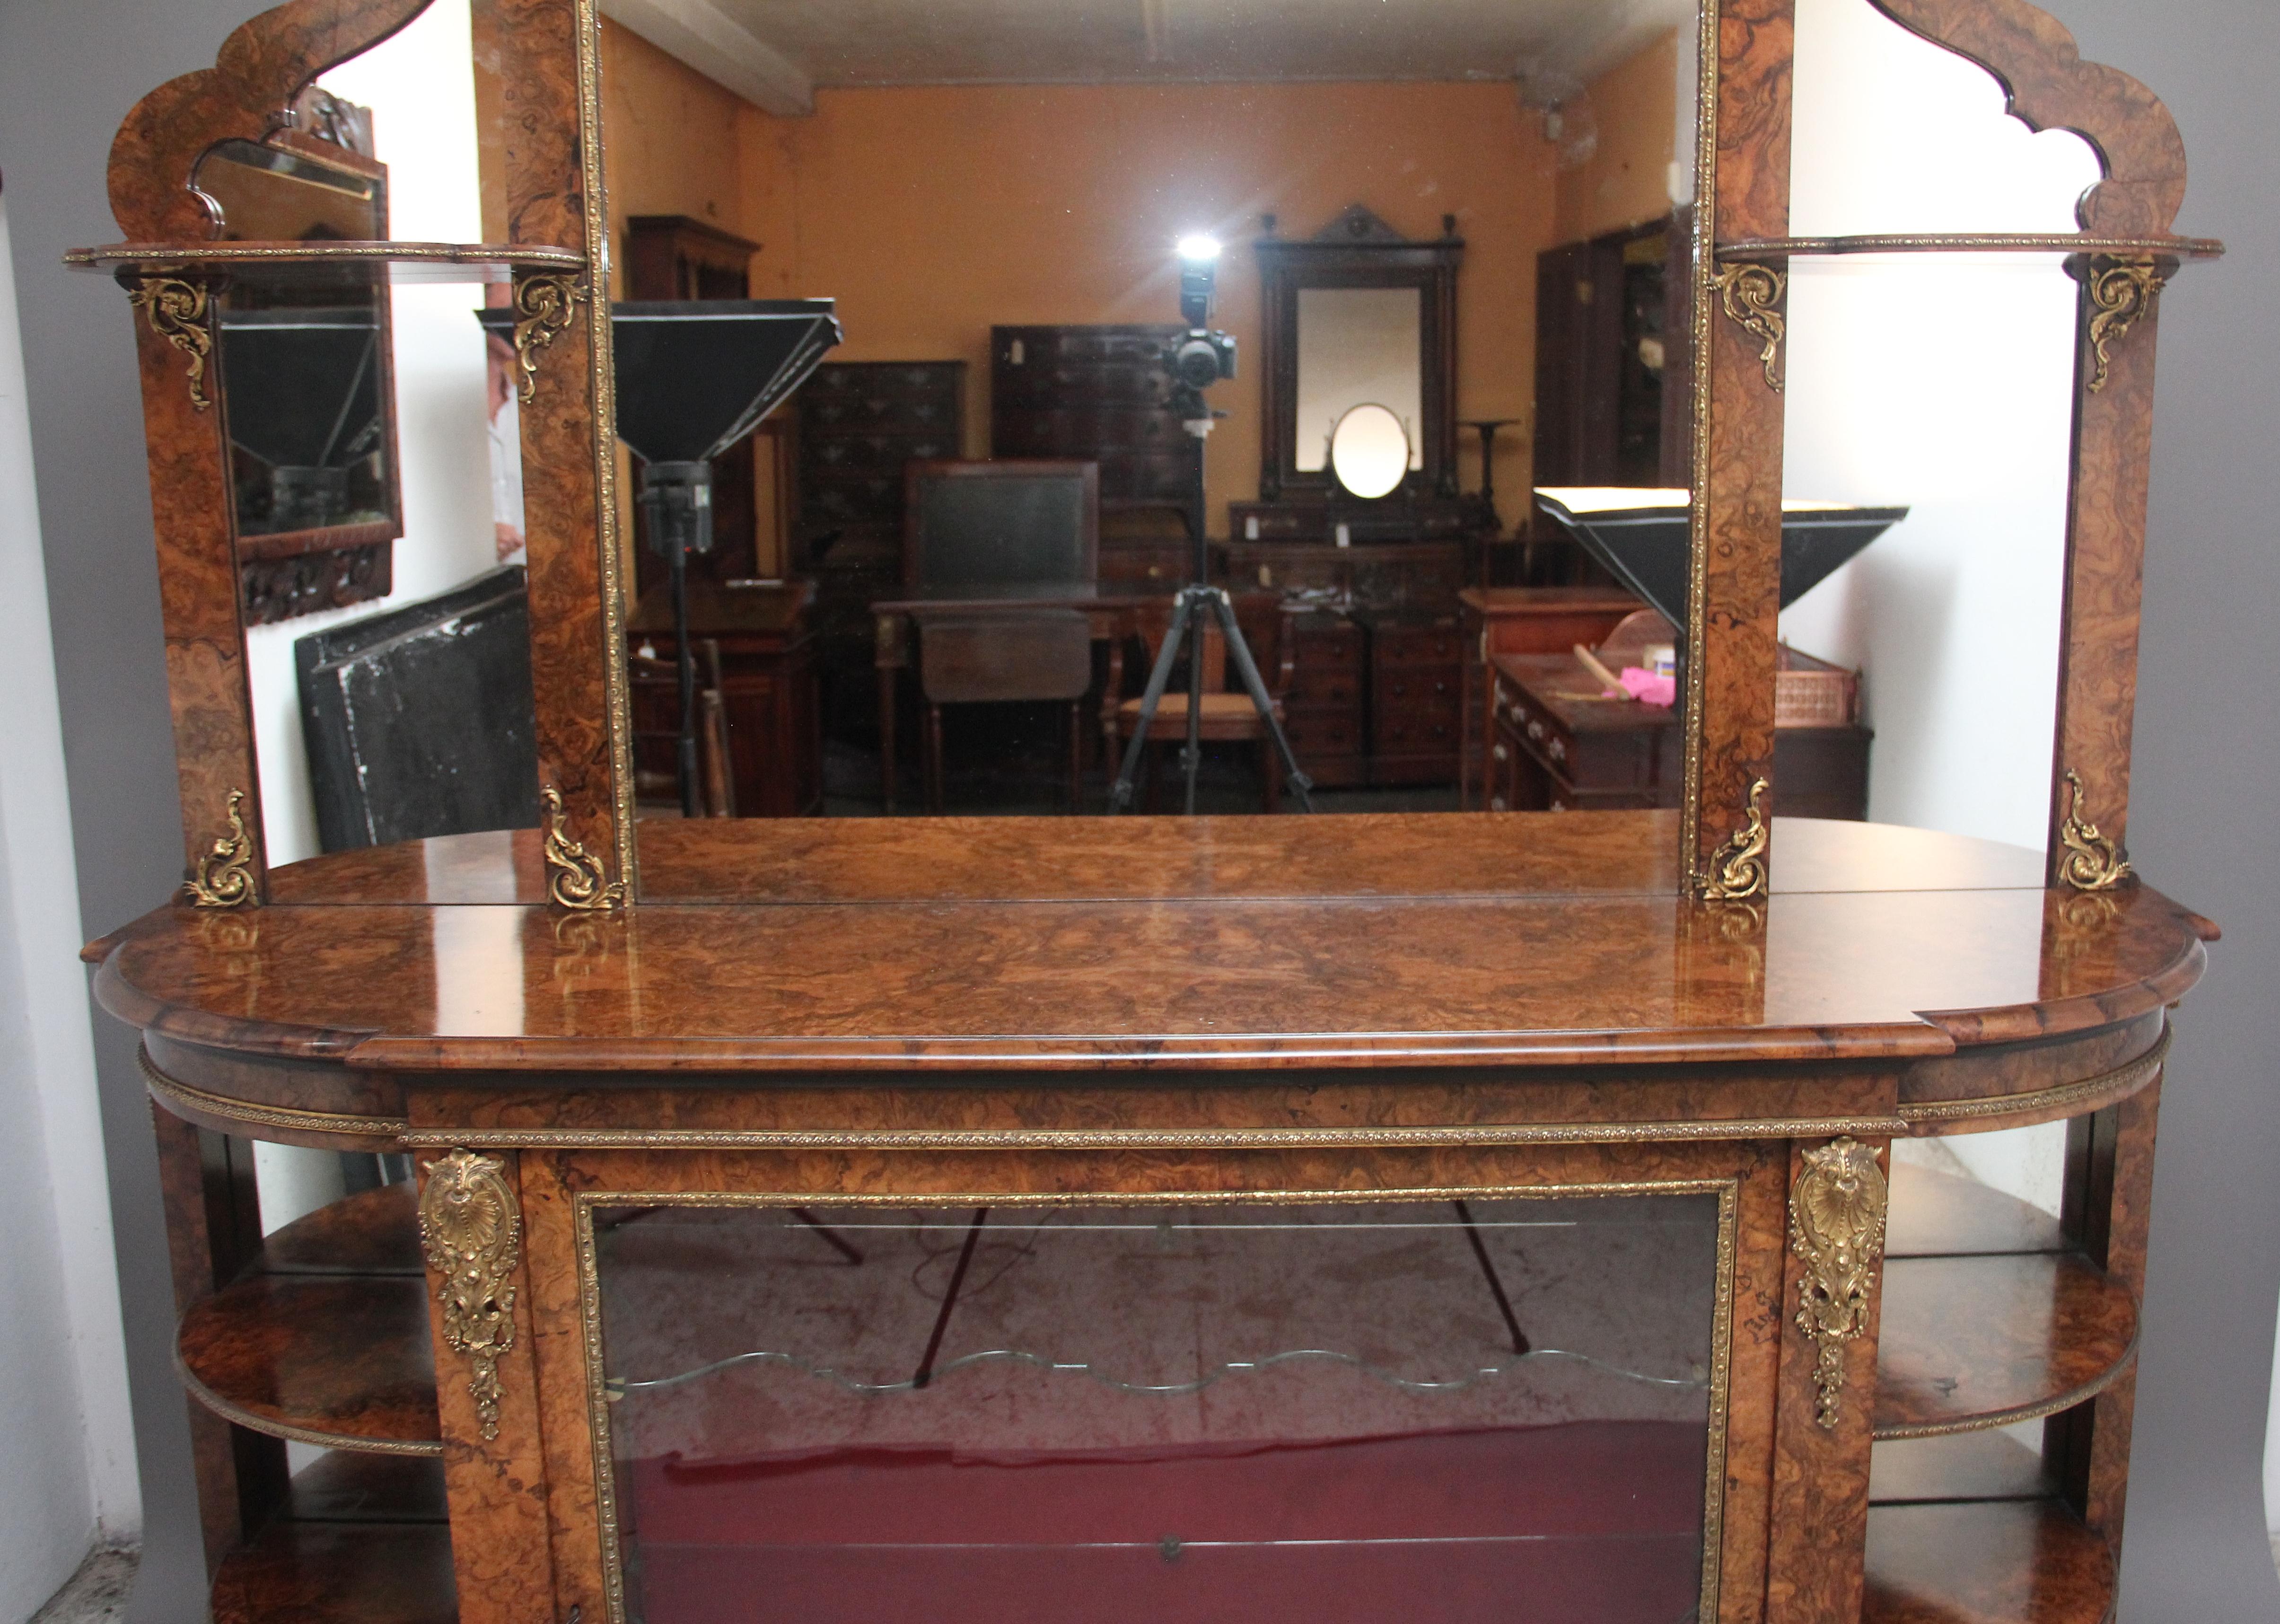 Exhibition Quality Antique 19th Century Burr Walnut Mirror Back Credenza In Good Condition For Sale In Martlesham, GB